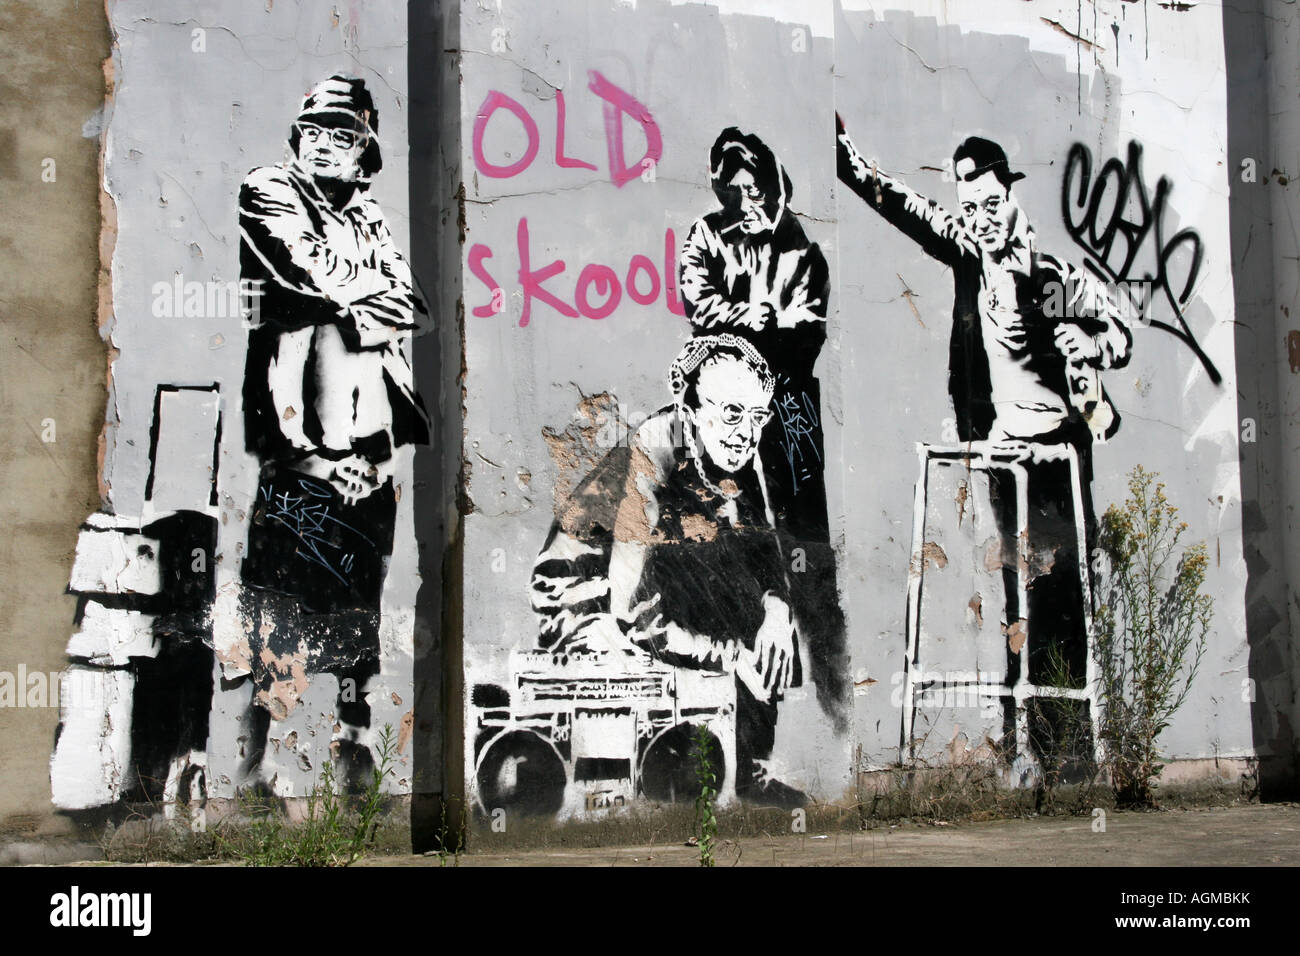 Old Skool' Banksy graffiti. London, England Stock Photo - Alamy